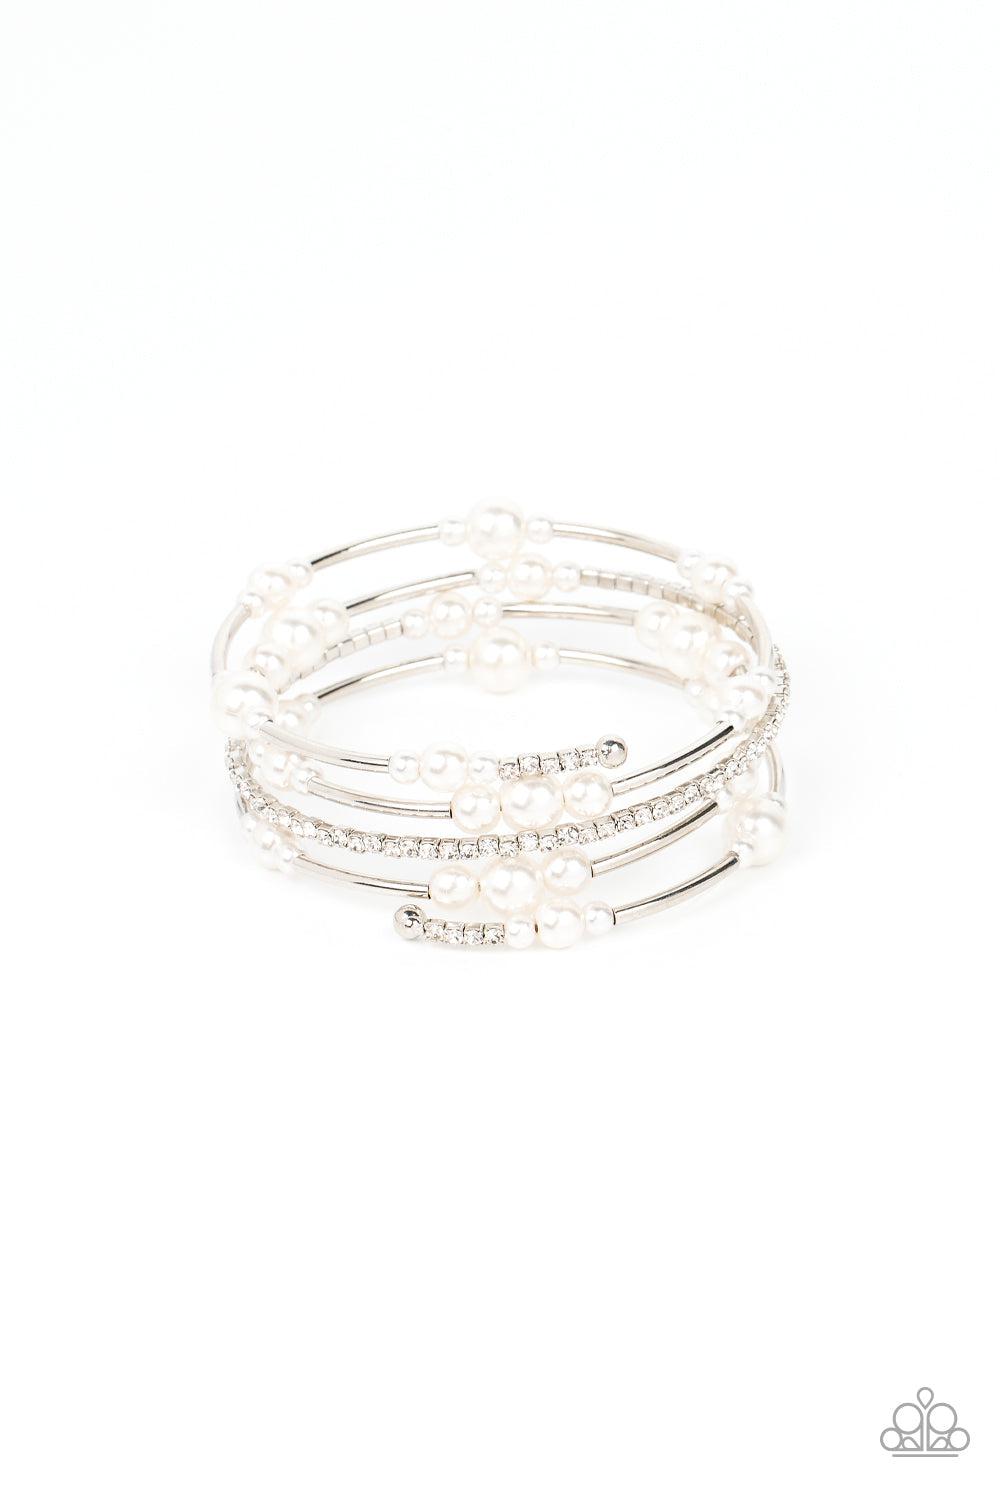 Marina Masterpiece White Pearl Infinity Wrap Bracelet - Paparazzi Accessories- lightbox - CarasShop.com - $5 Jewelry by Cara Jewels